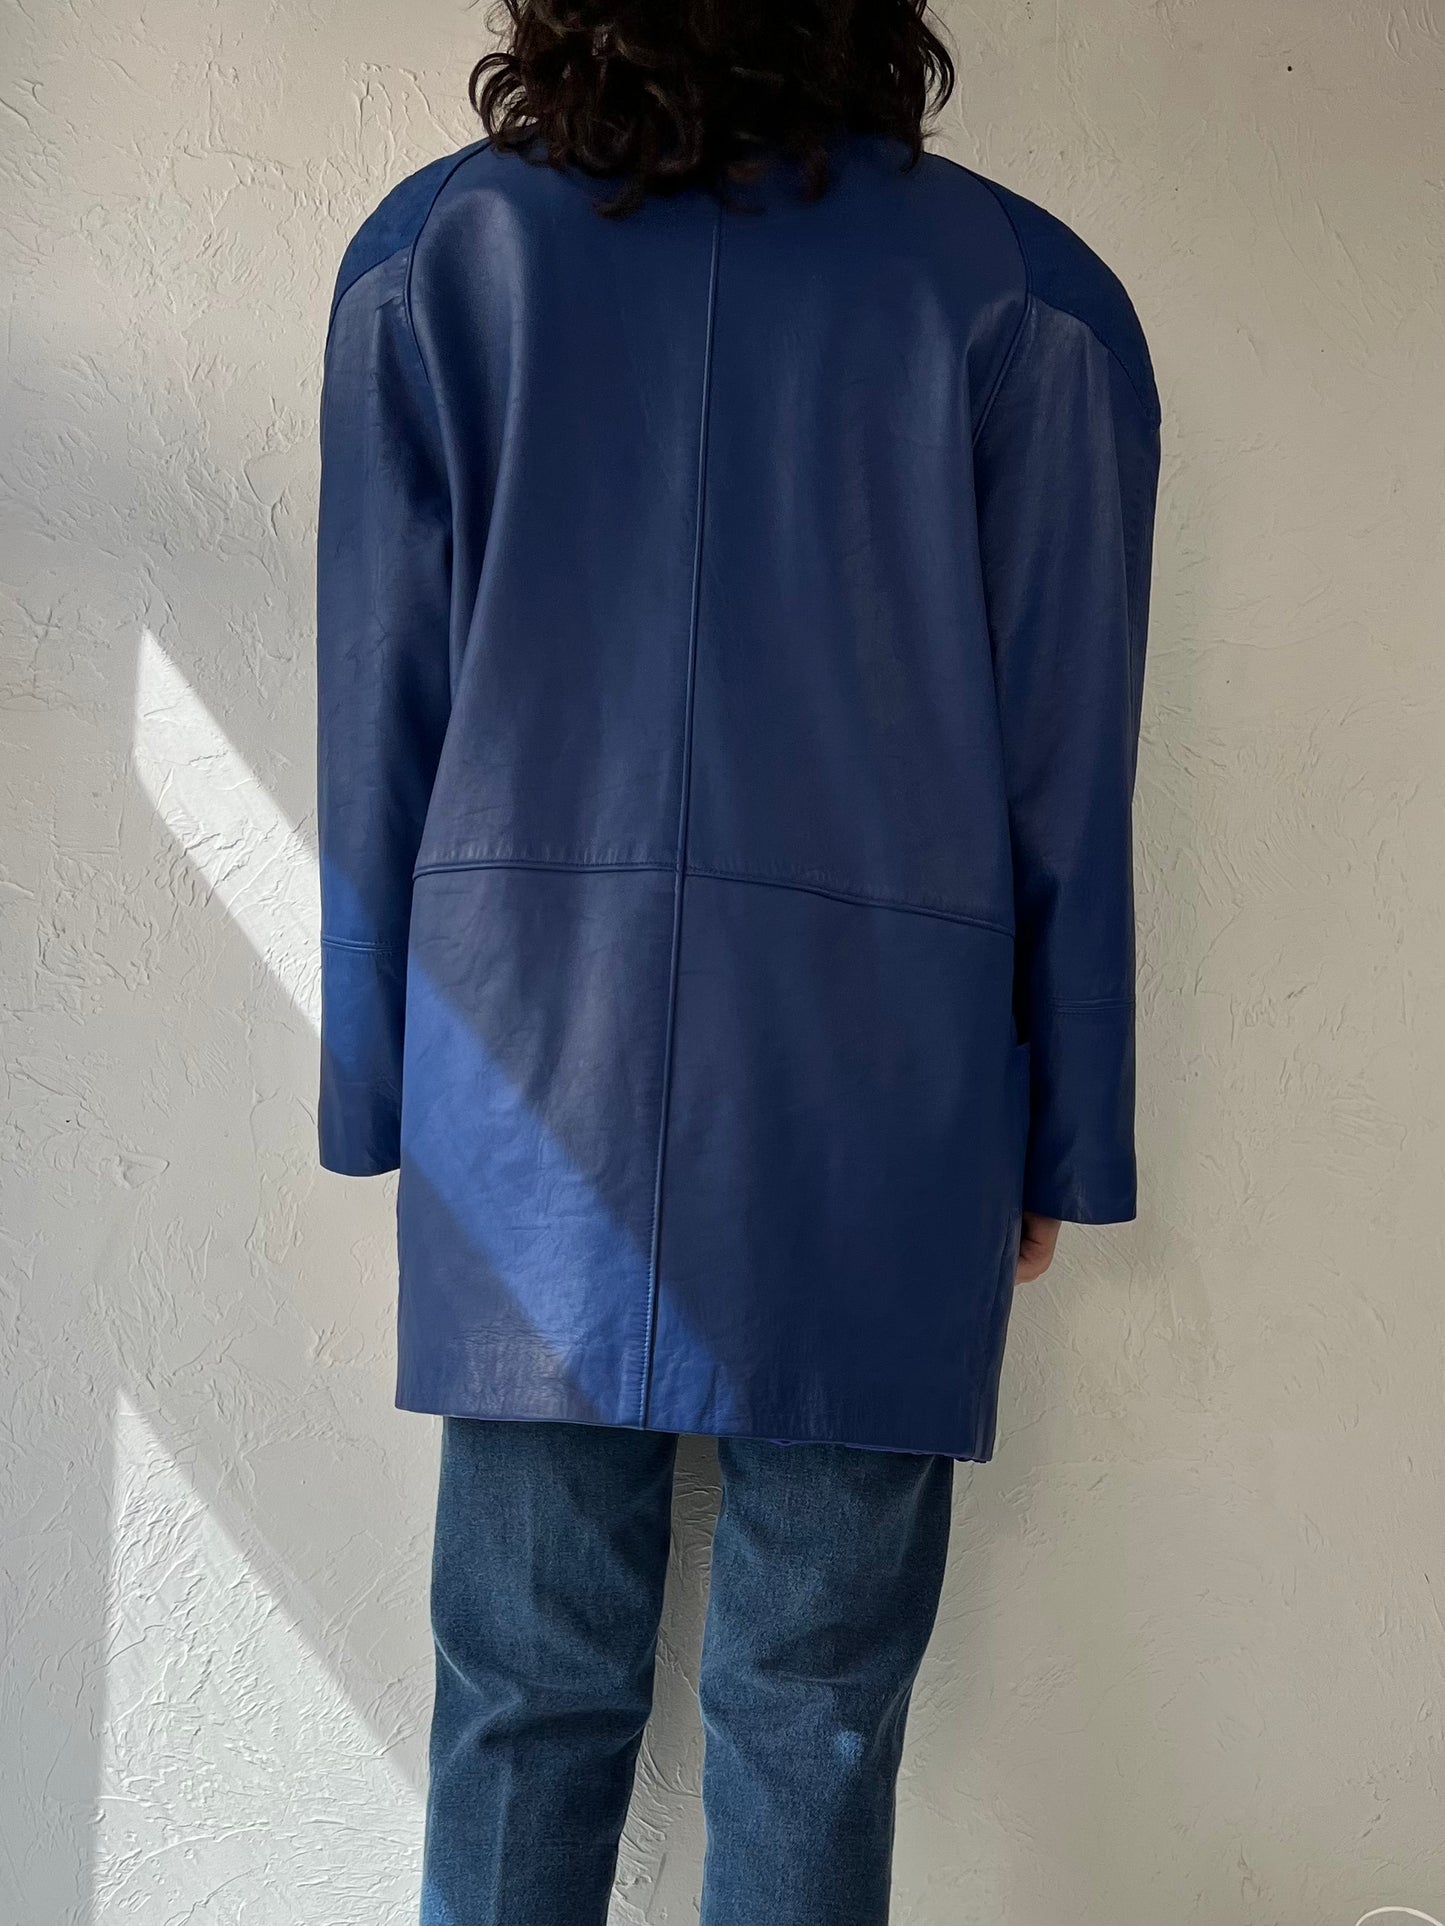 80s 90s 'Rae Cenes' Electric Blue Leather Jacket / Medium